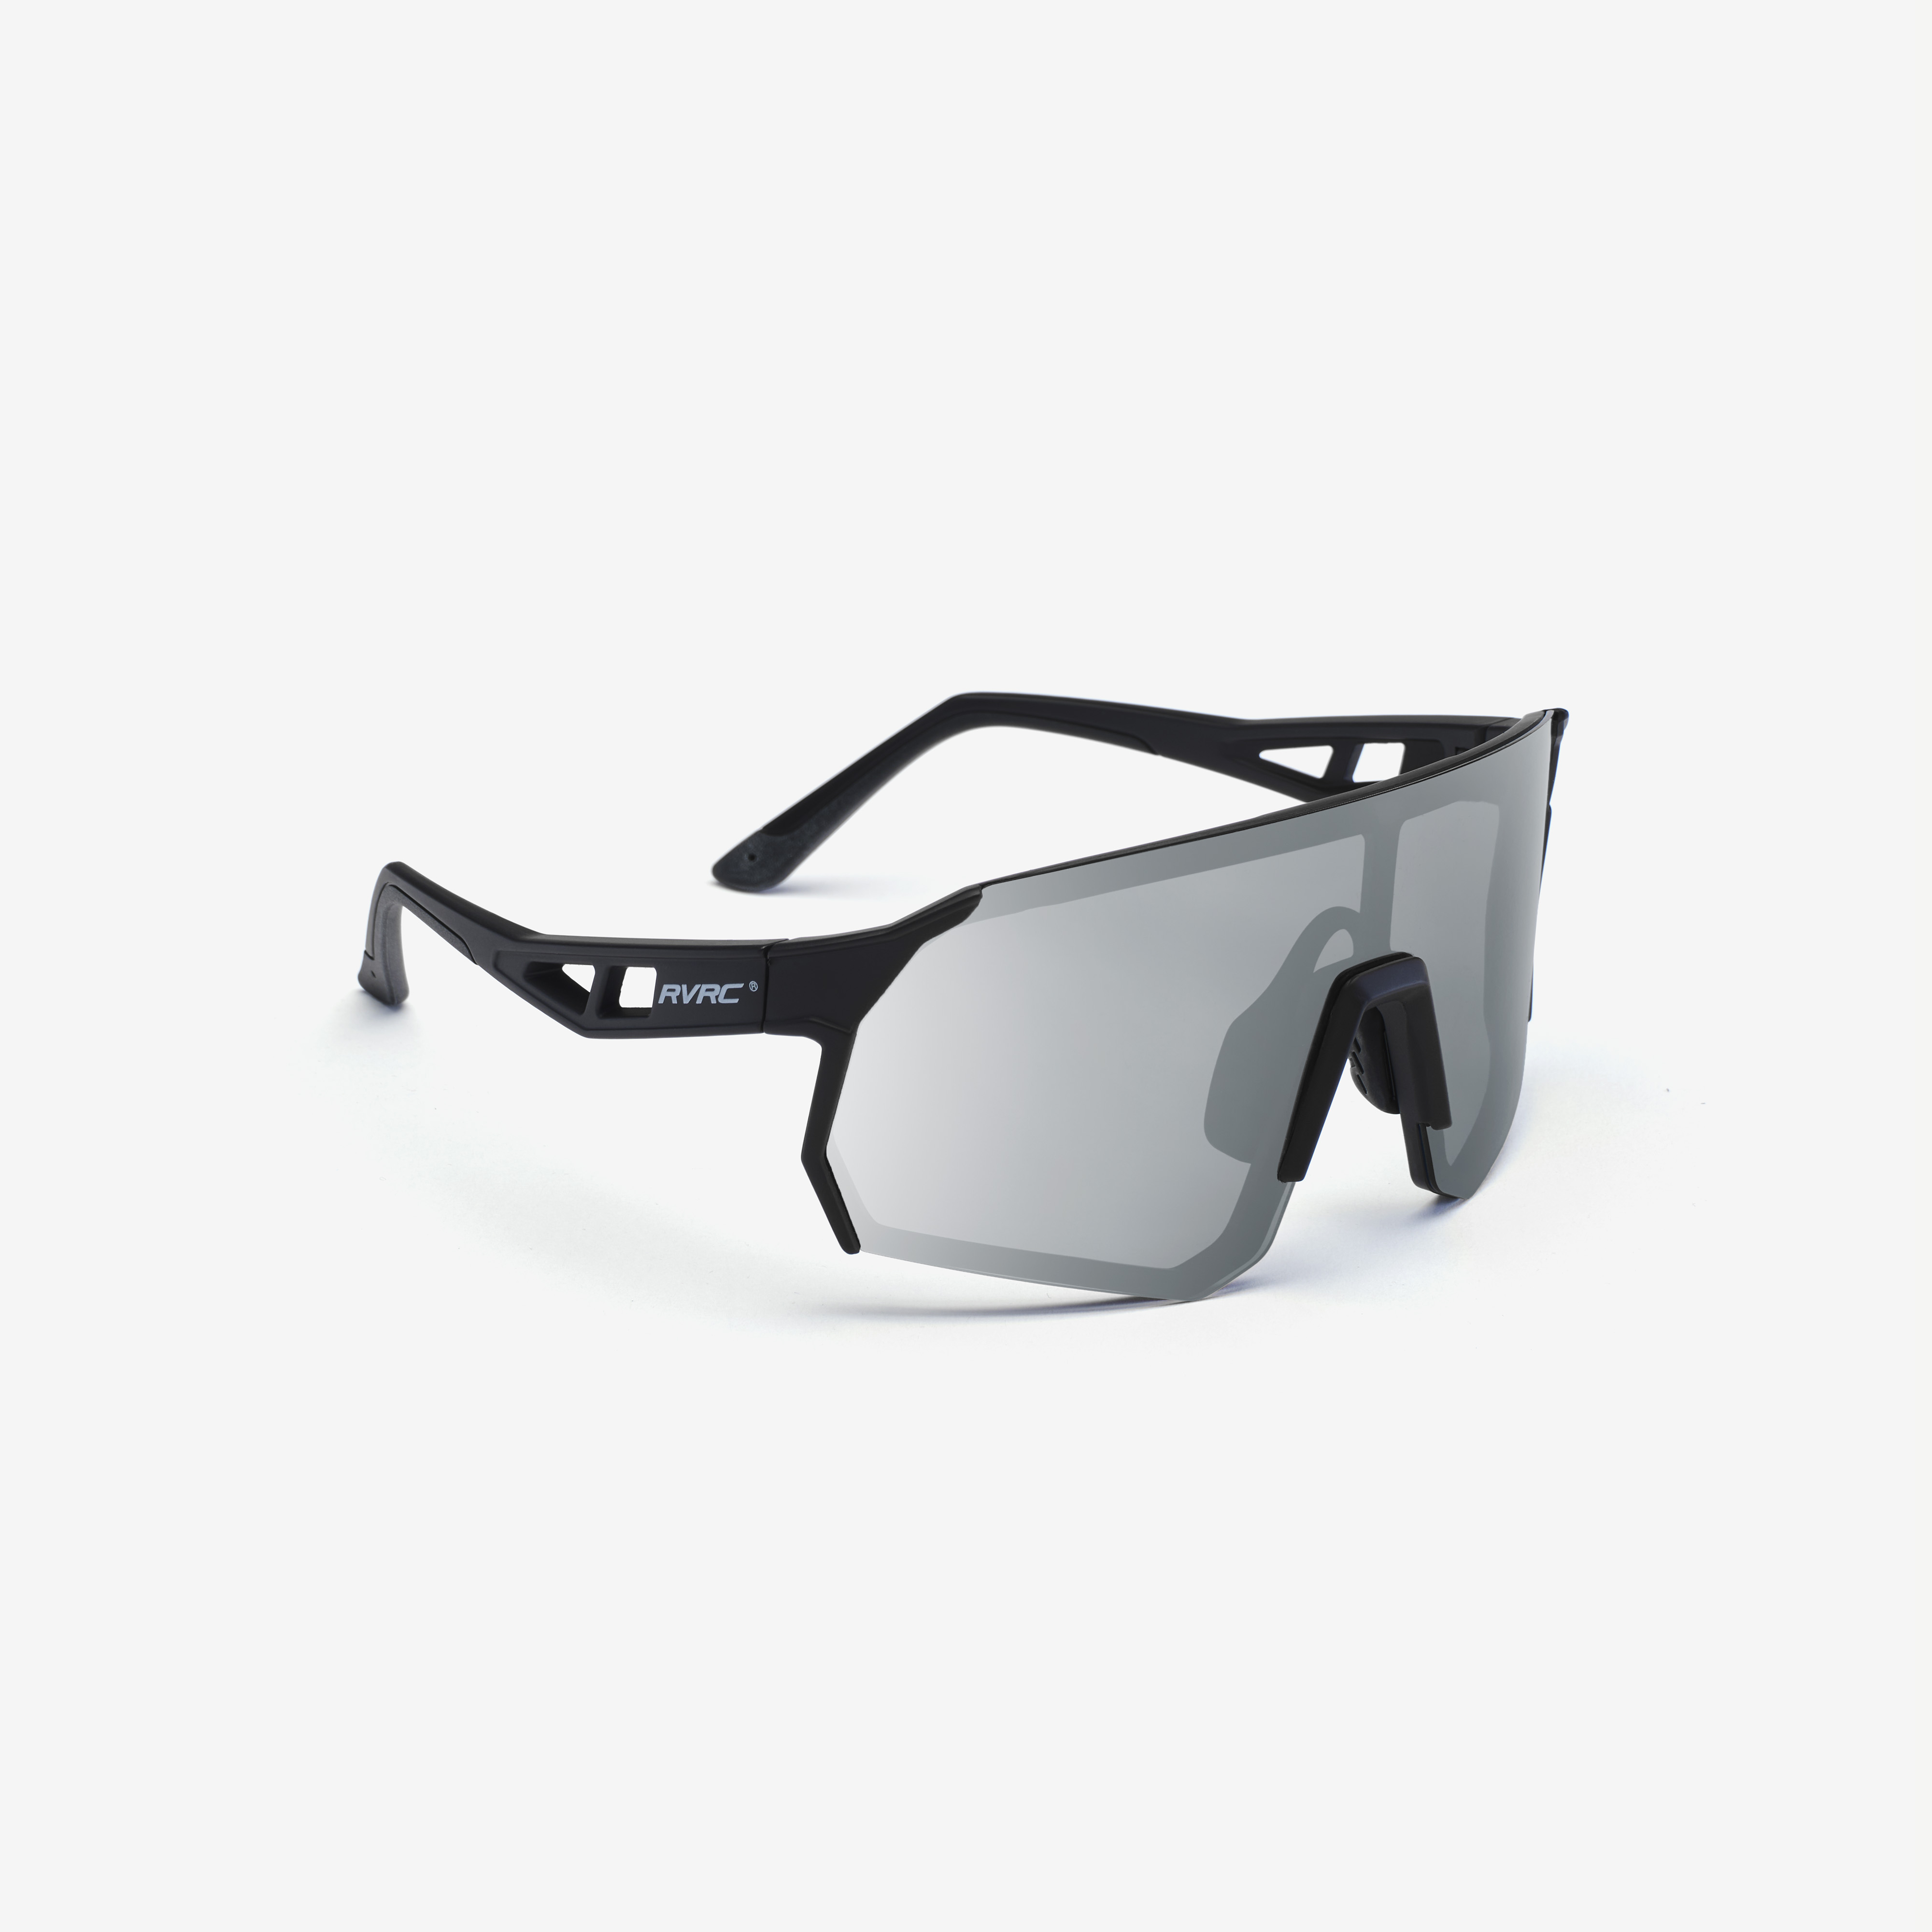 Castor Polarized Sports Sunglasses Black/Silver Grey